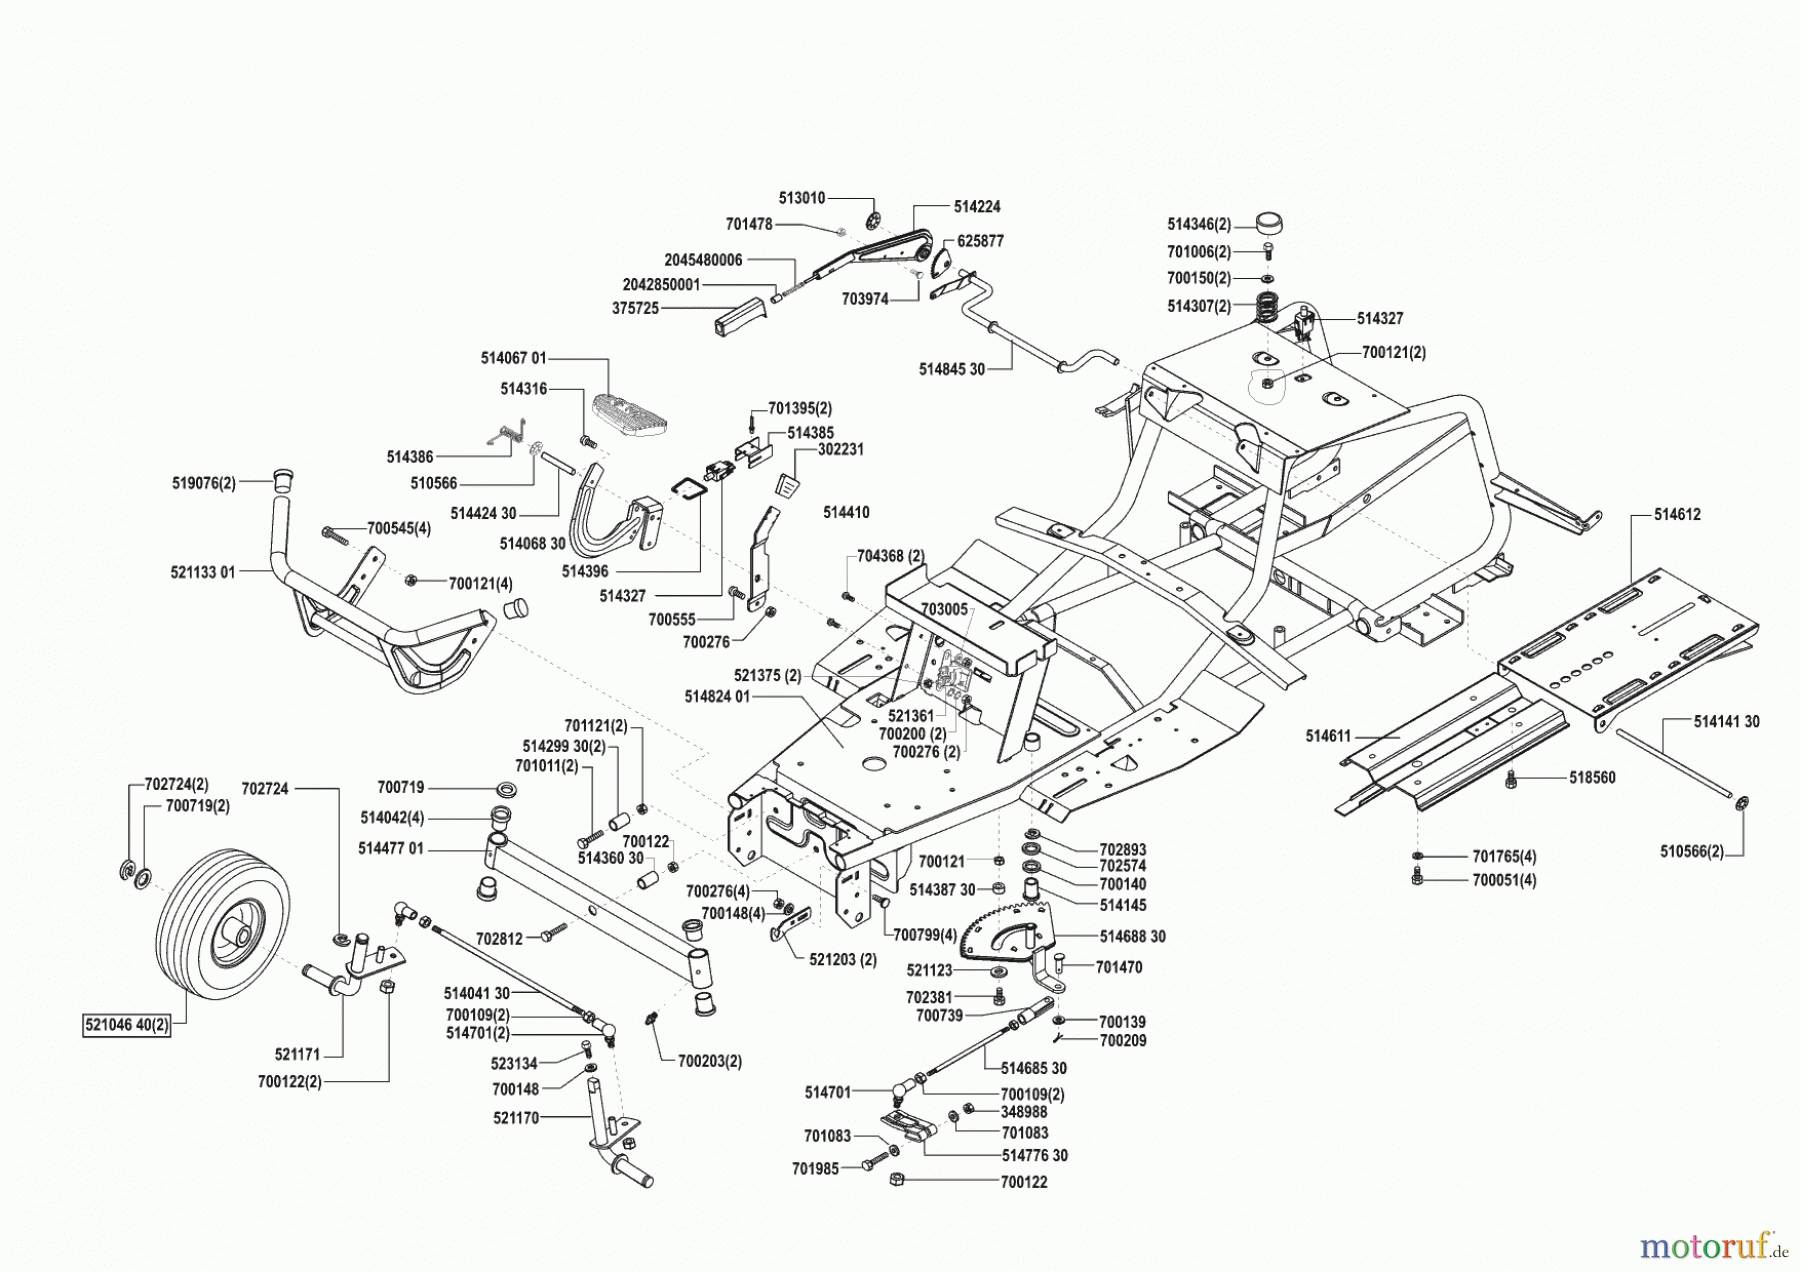  Concord Gartentechnik Rasentraktor T16-102 ab 08/2001 Seite 2